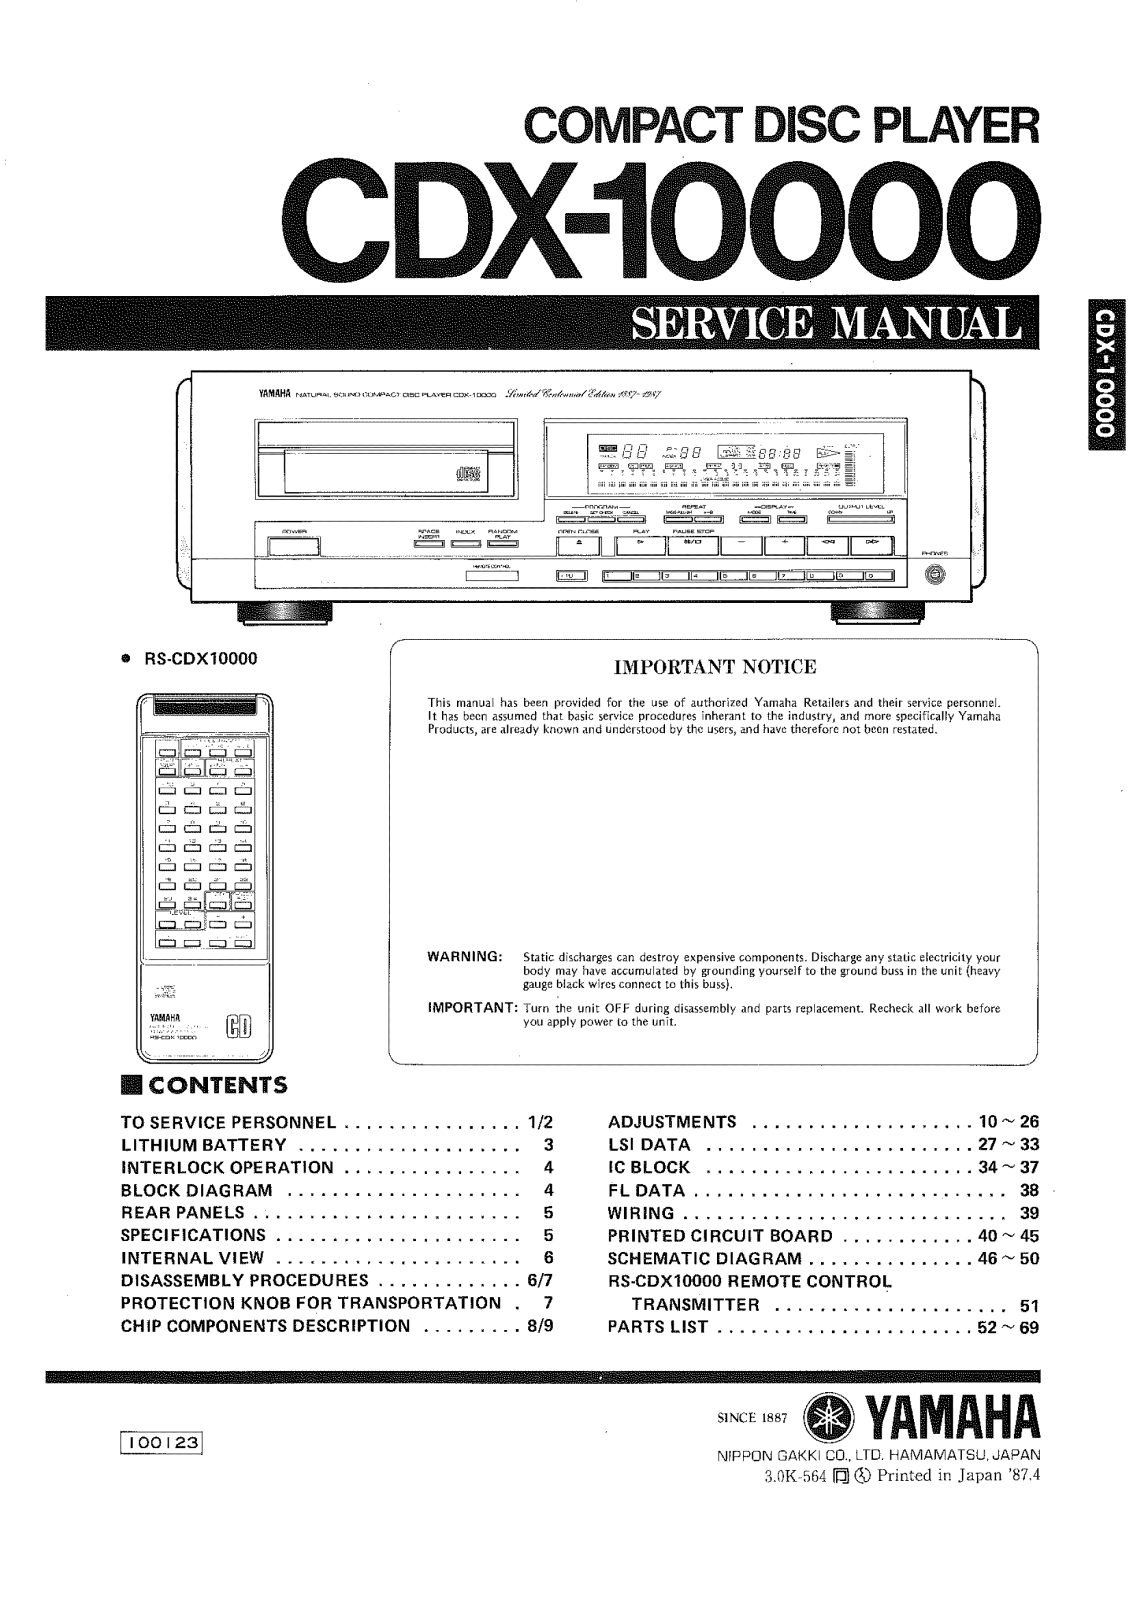 Yamaha CDX-10000 Service Manual